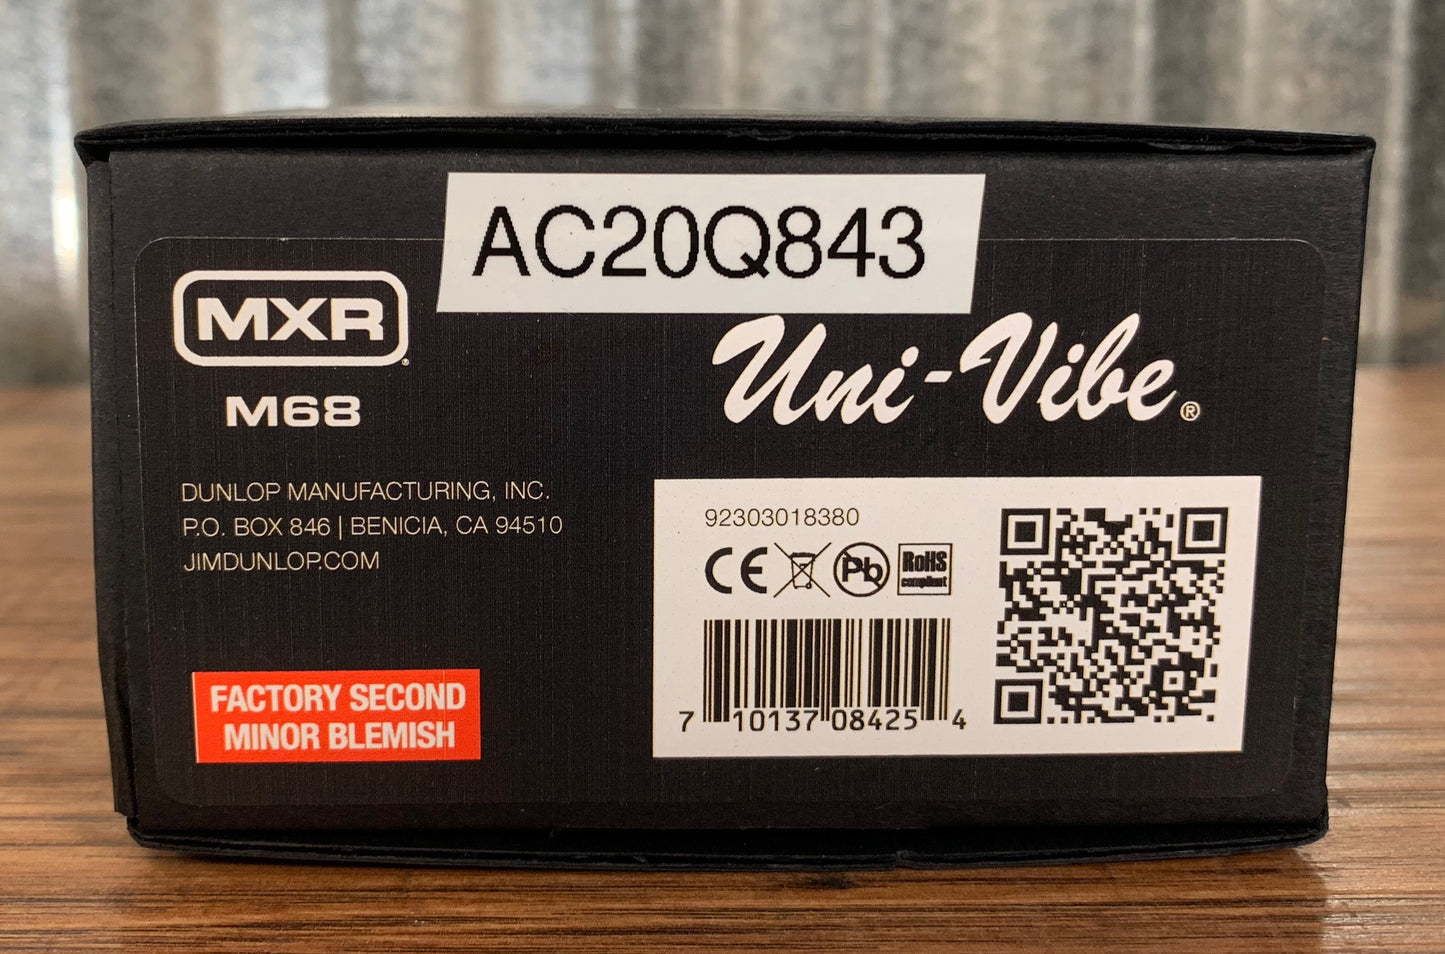 Dunlop MXR M68 Uni-vibe Chorus Vibrato Univibe Guitar Effect Pedal B Stock